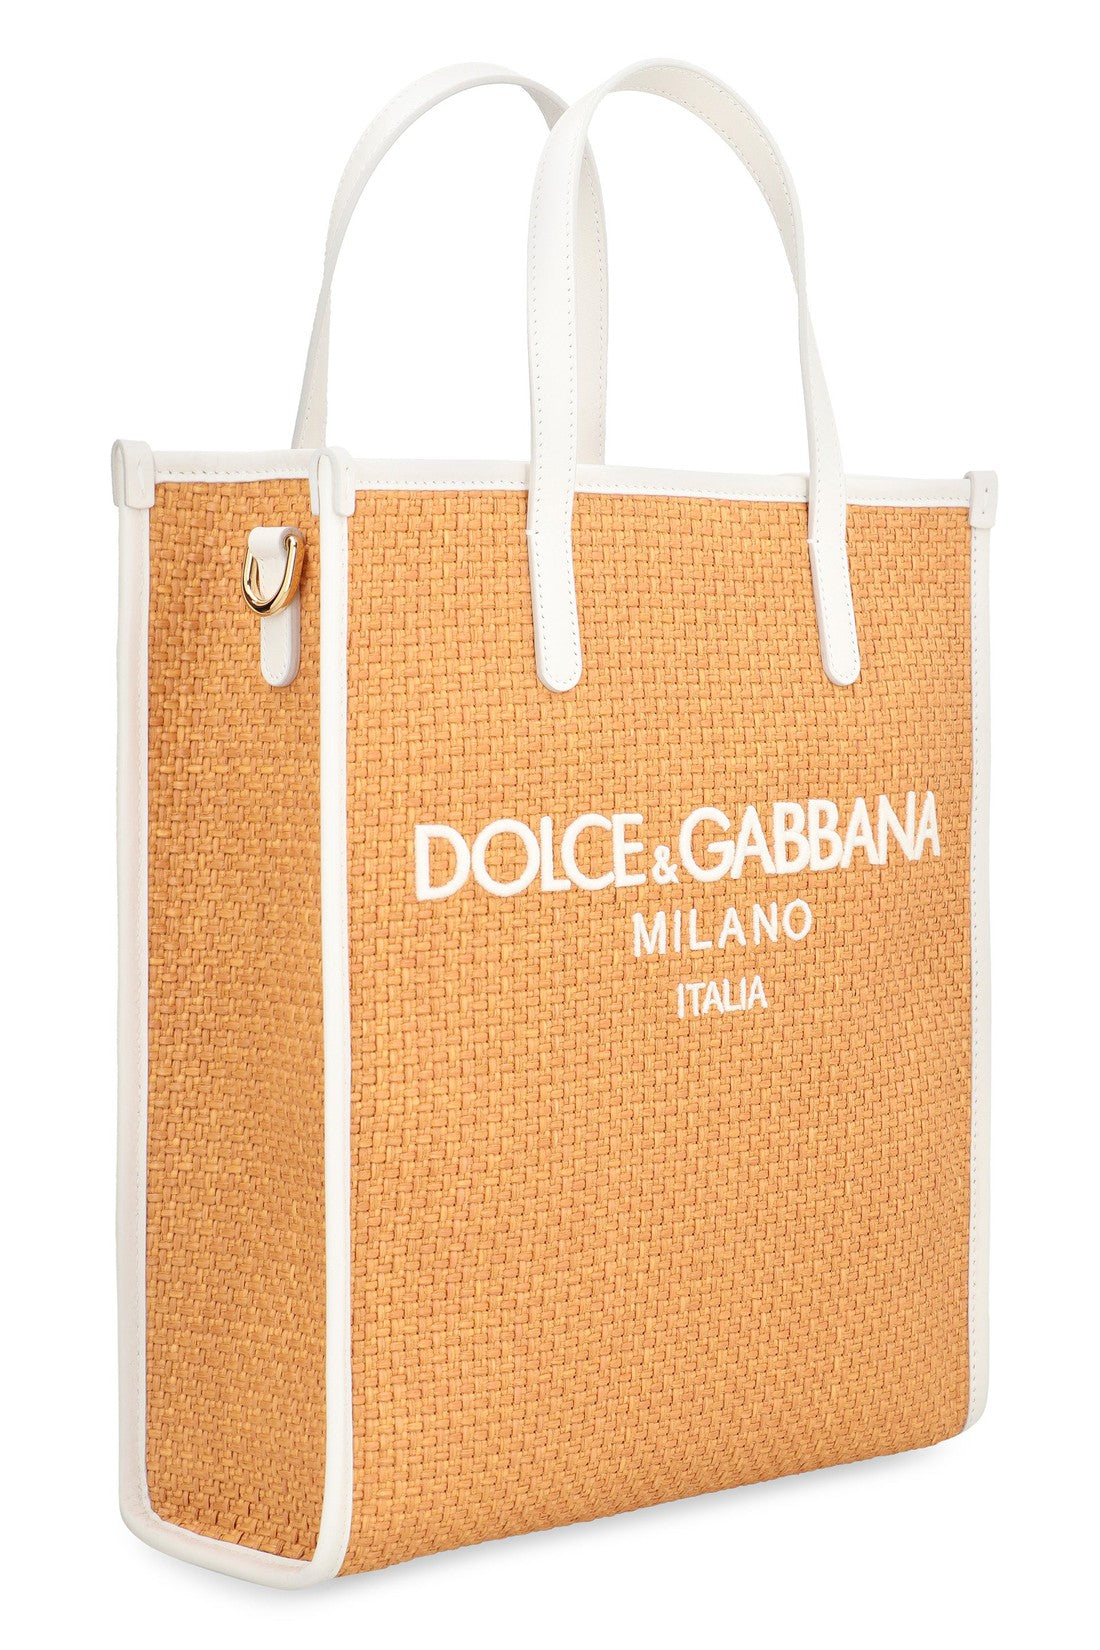 Dolce & Gabbana-OUTLET-SALE-Raffia tote bag-ARCHIVIST